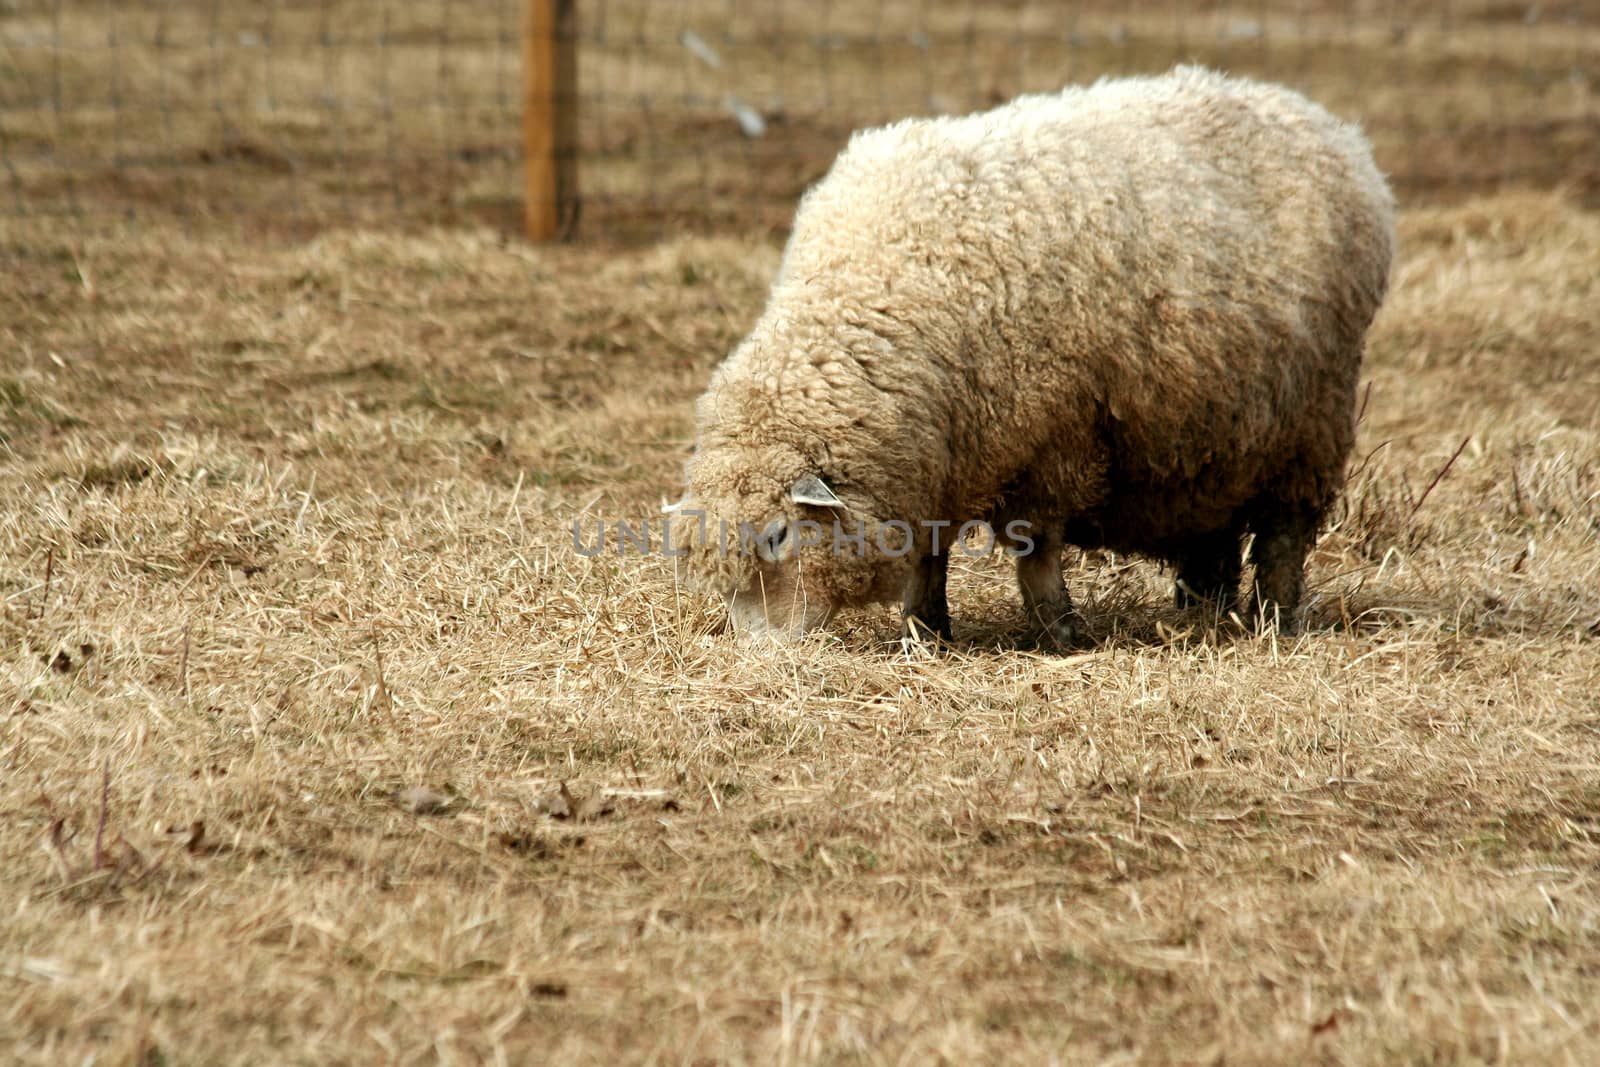 Sheep grazing in a field by njnightsky